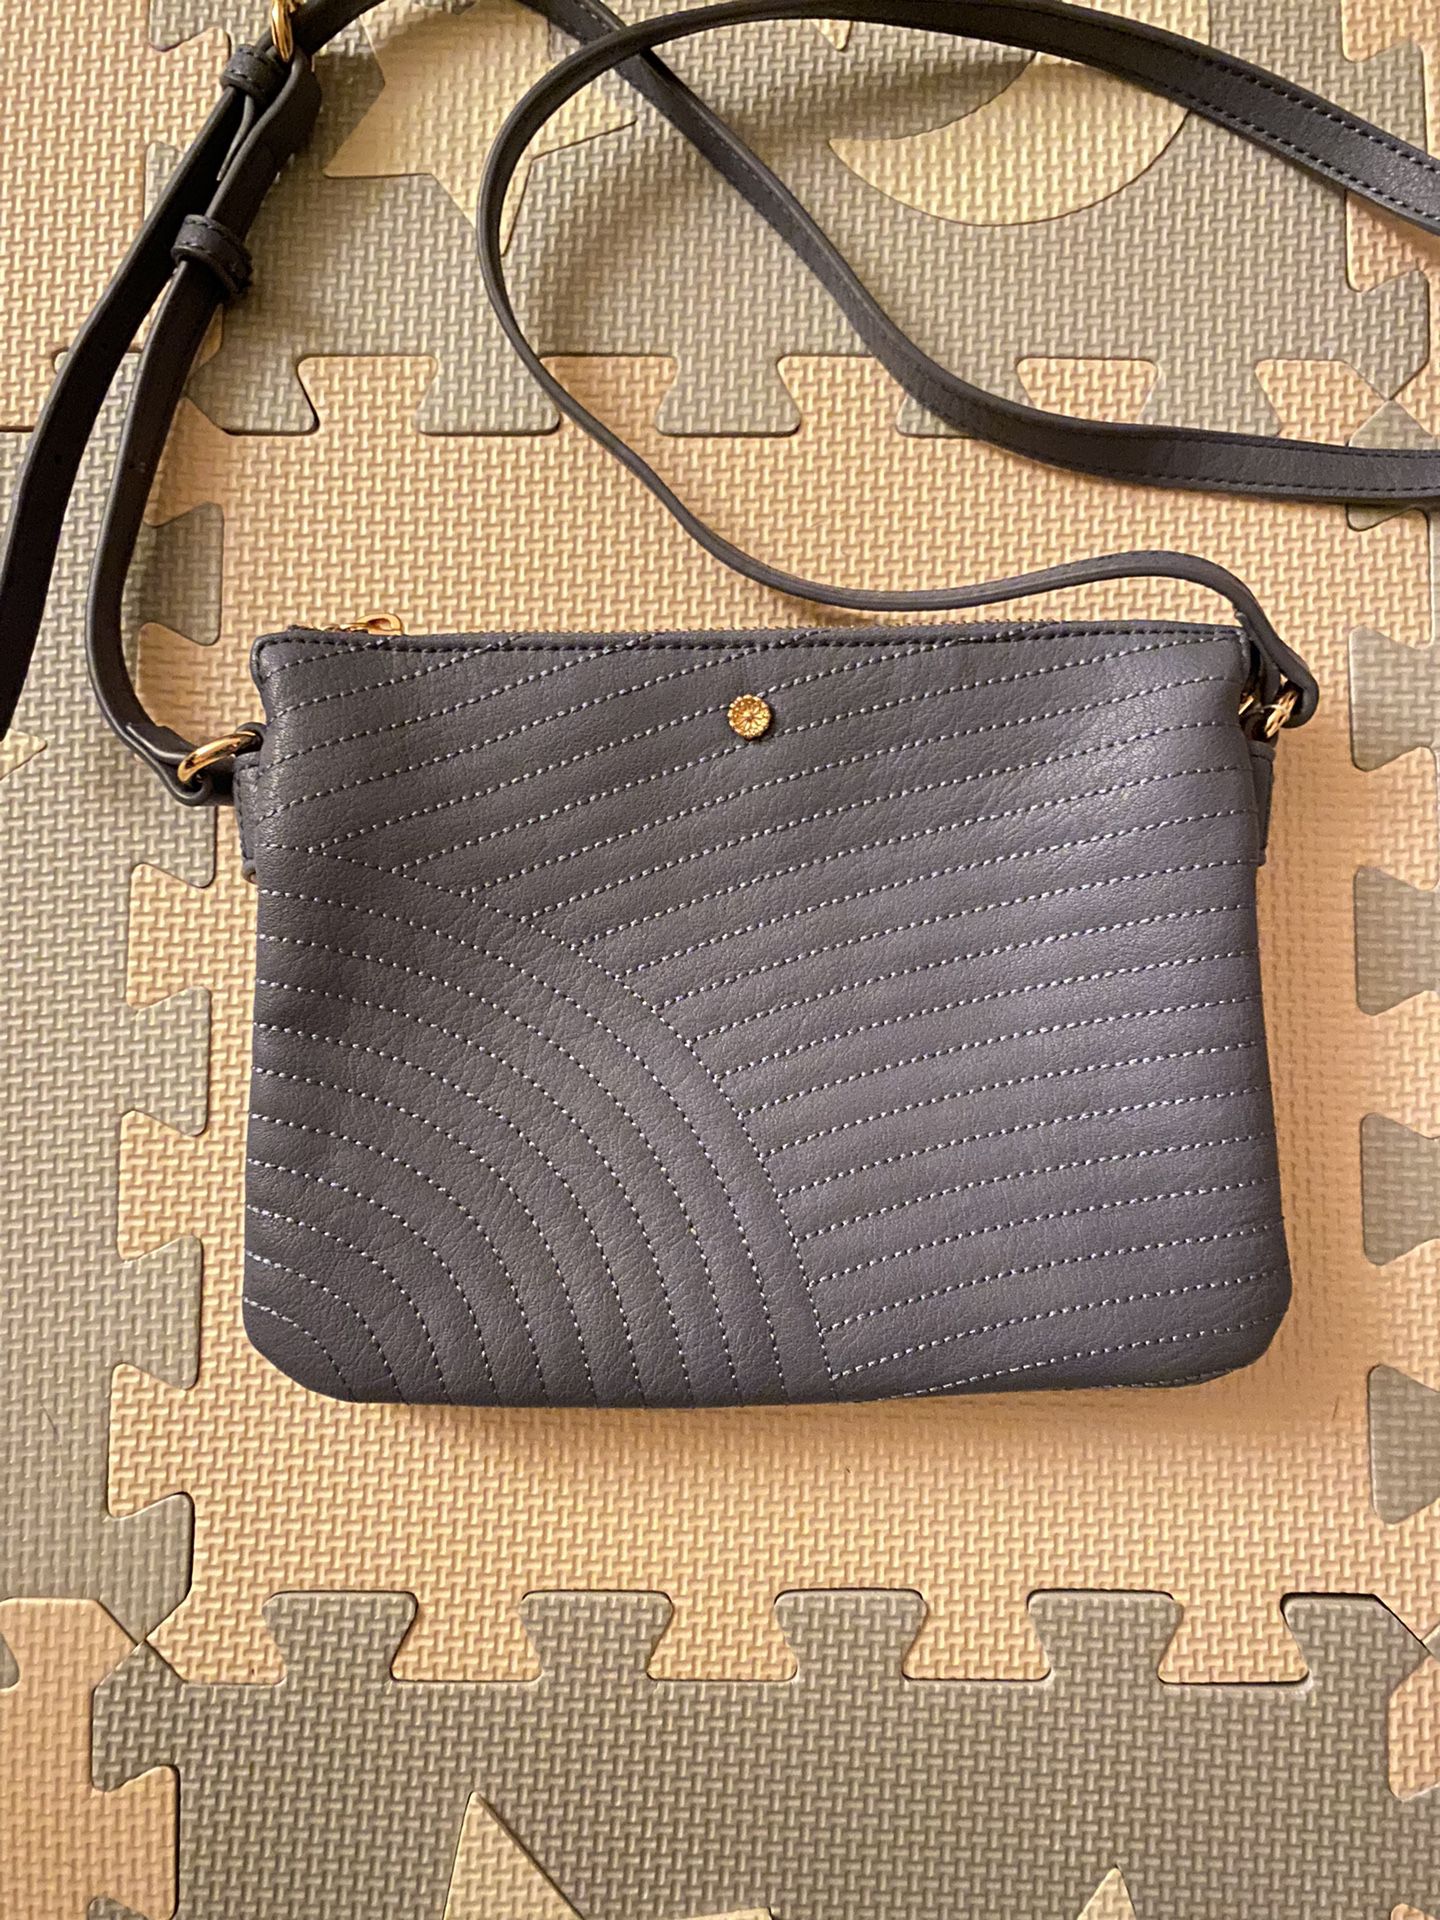 lauren conrad leather purse